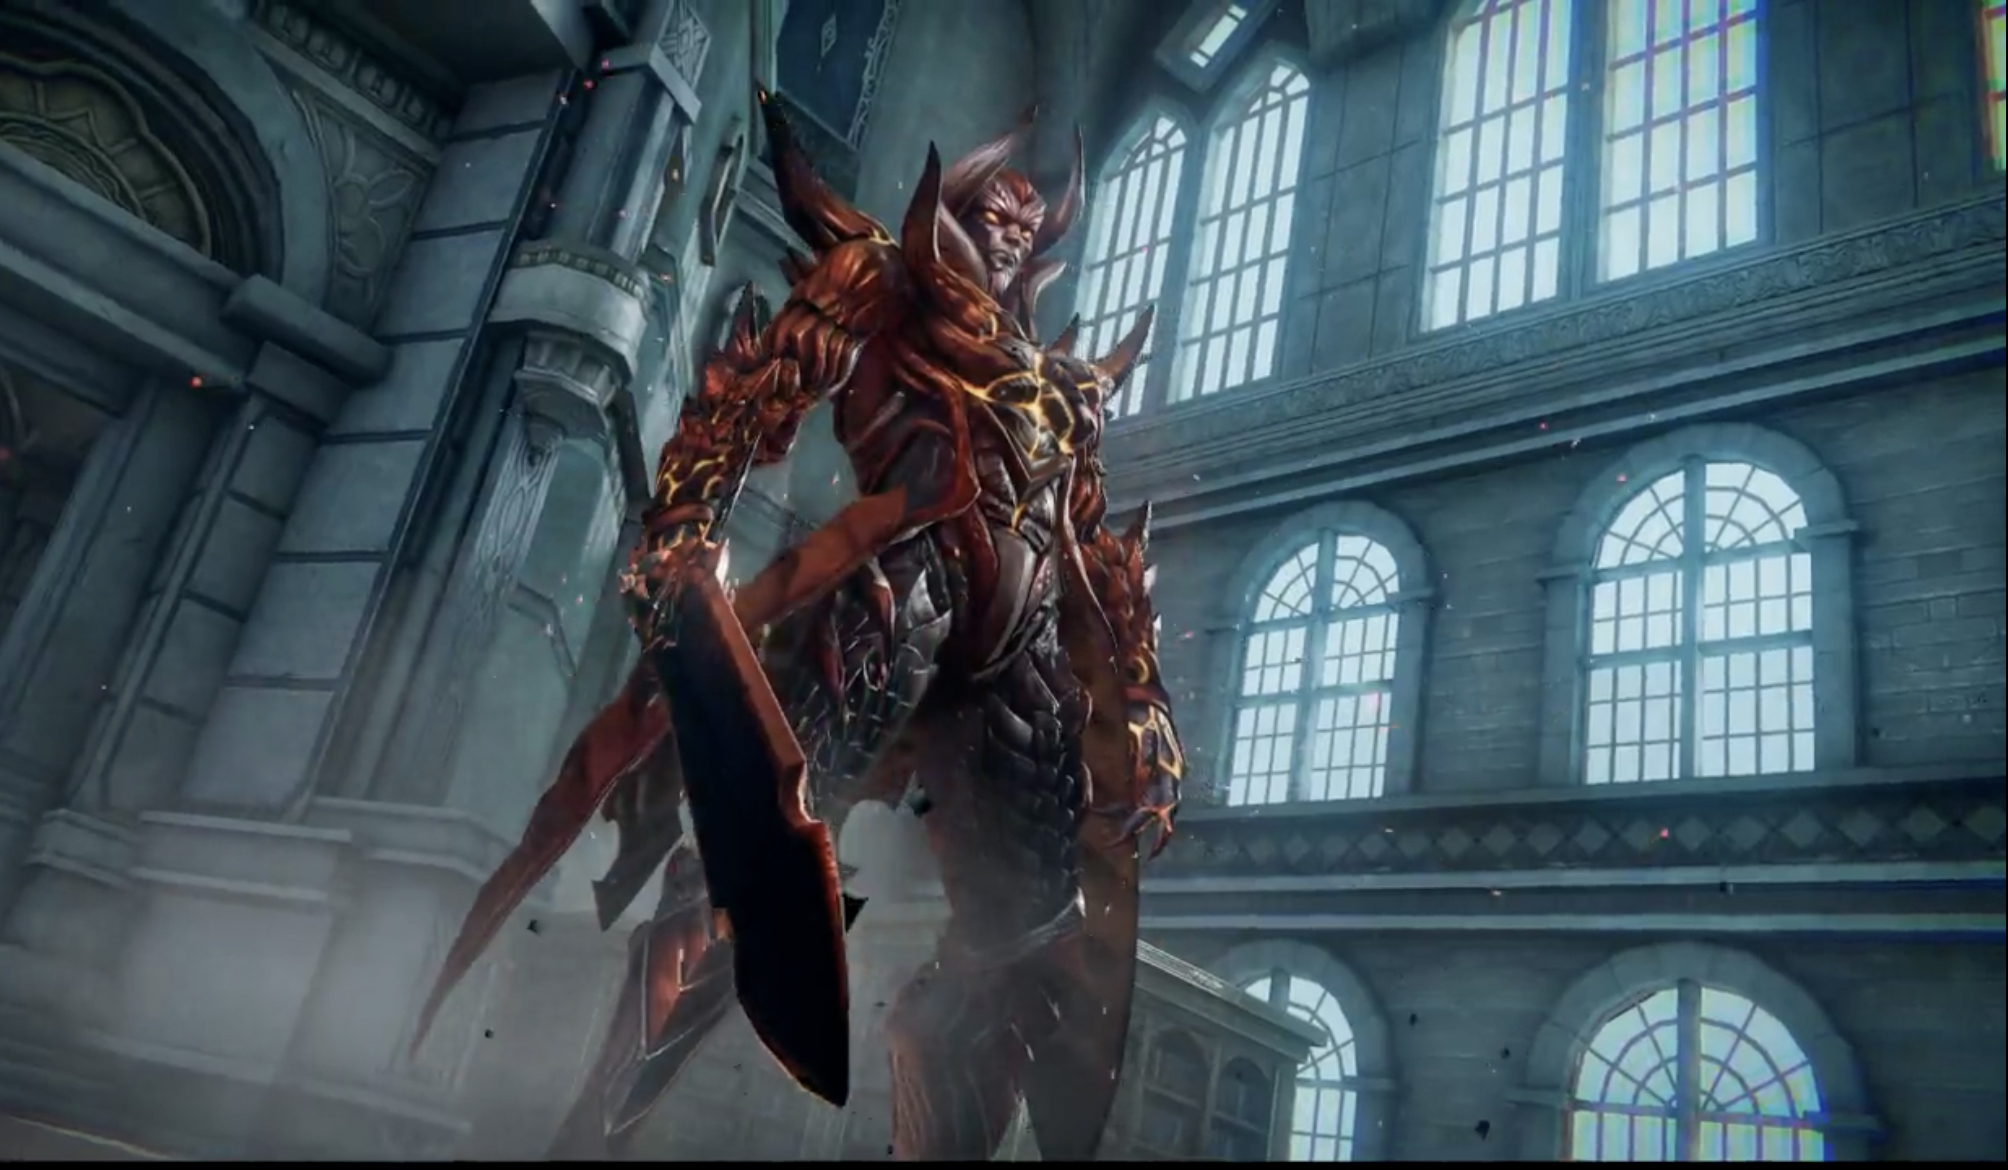 Dante's Devil Trigger form in Devil May Cry Peak of Combat..